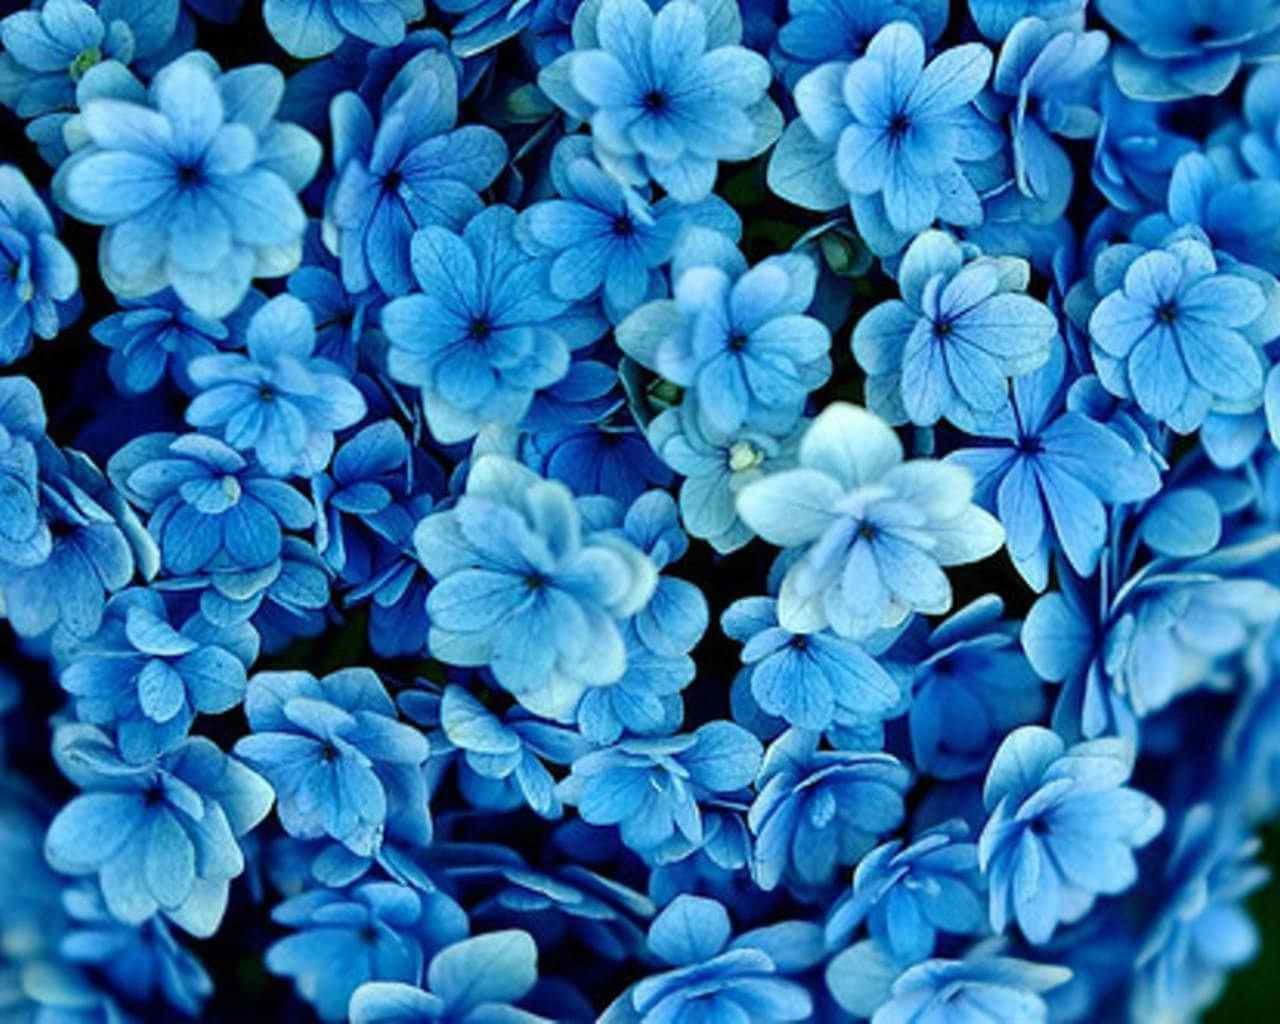 teal blue green flowers